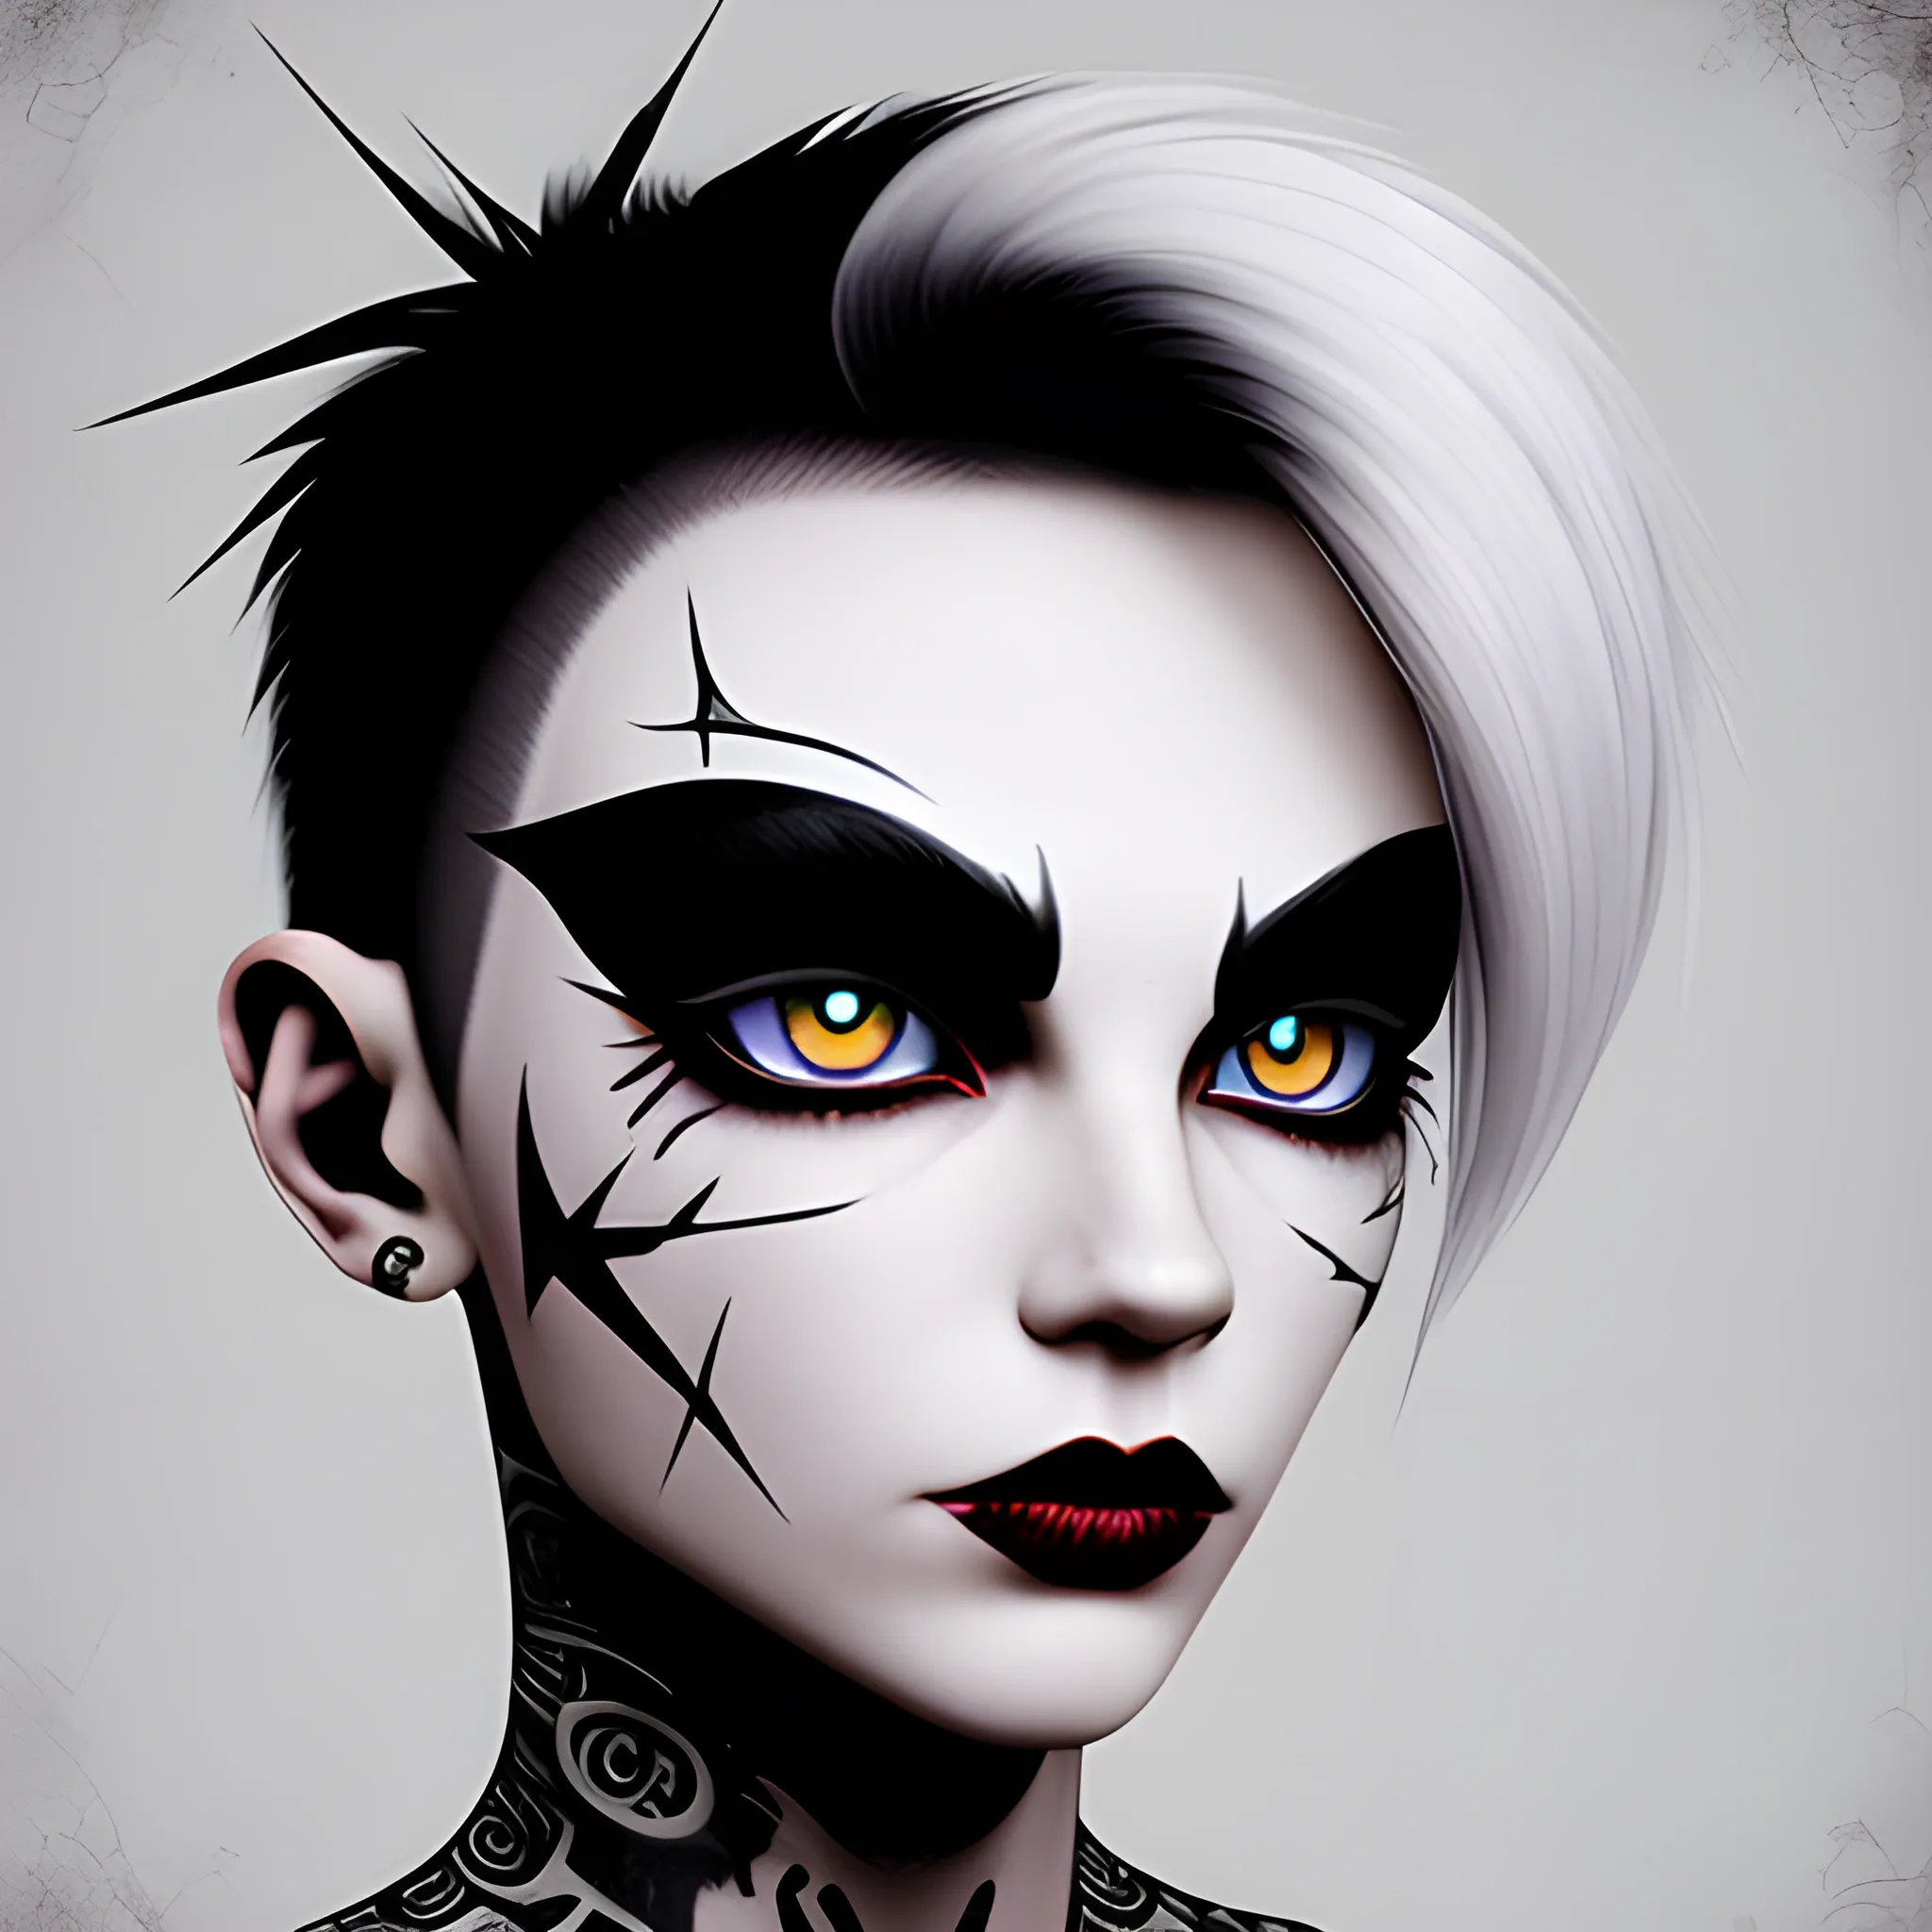 Punk White Character, Eye Shape of Plus Symbol, realistic